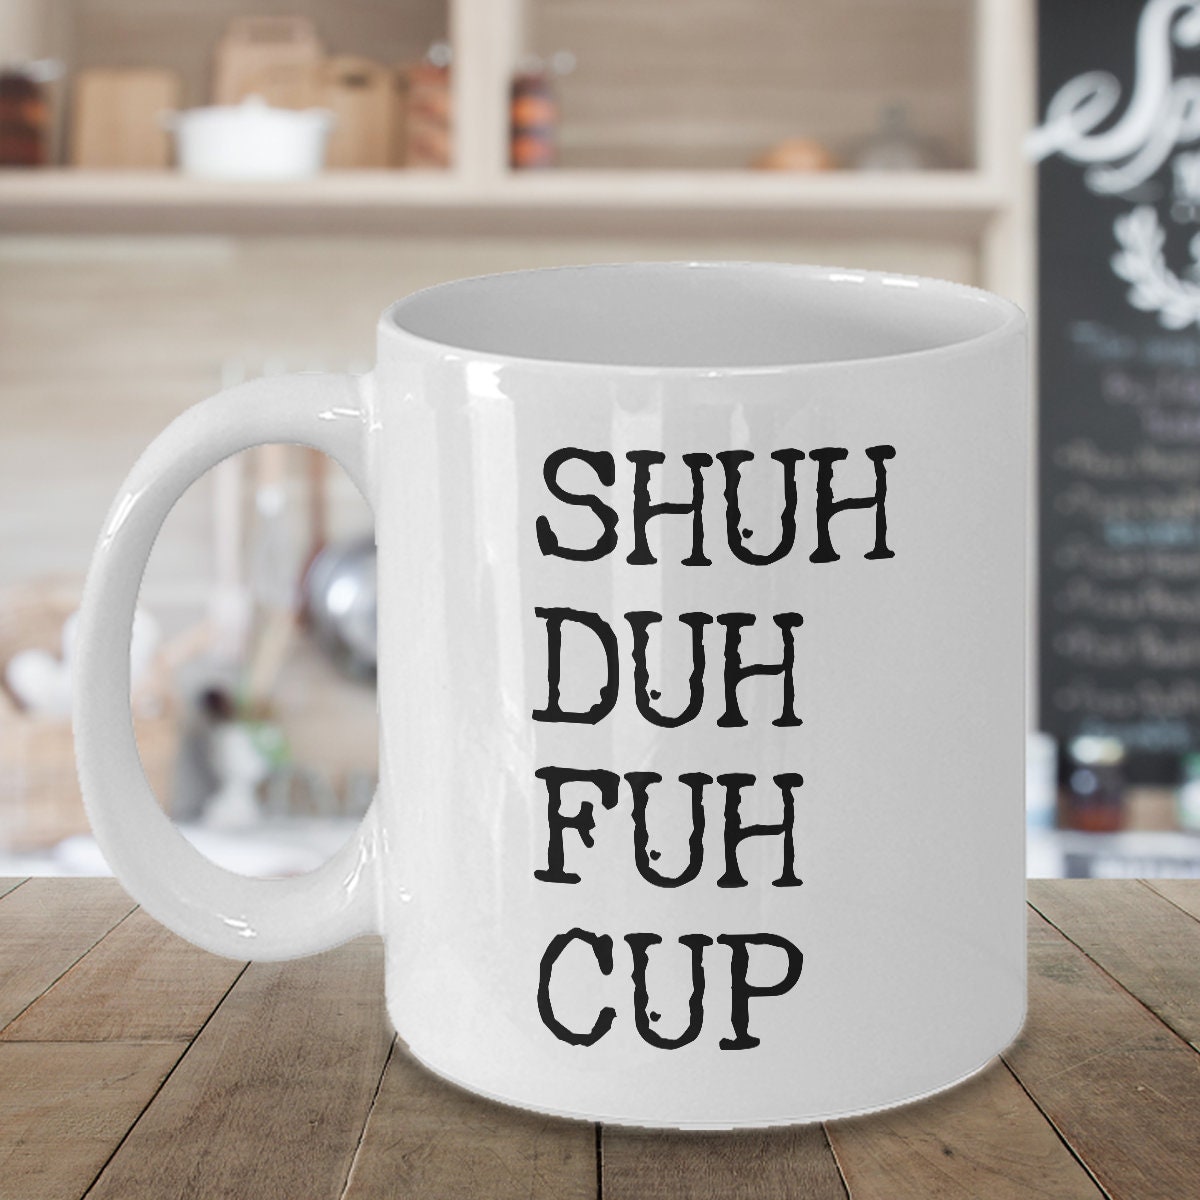 Mean Mug Ceramic Cup for Tea or Coffee Mug - 12oz Capacity